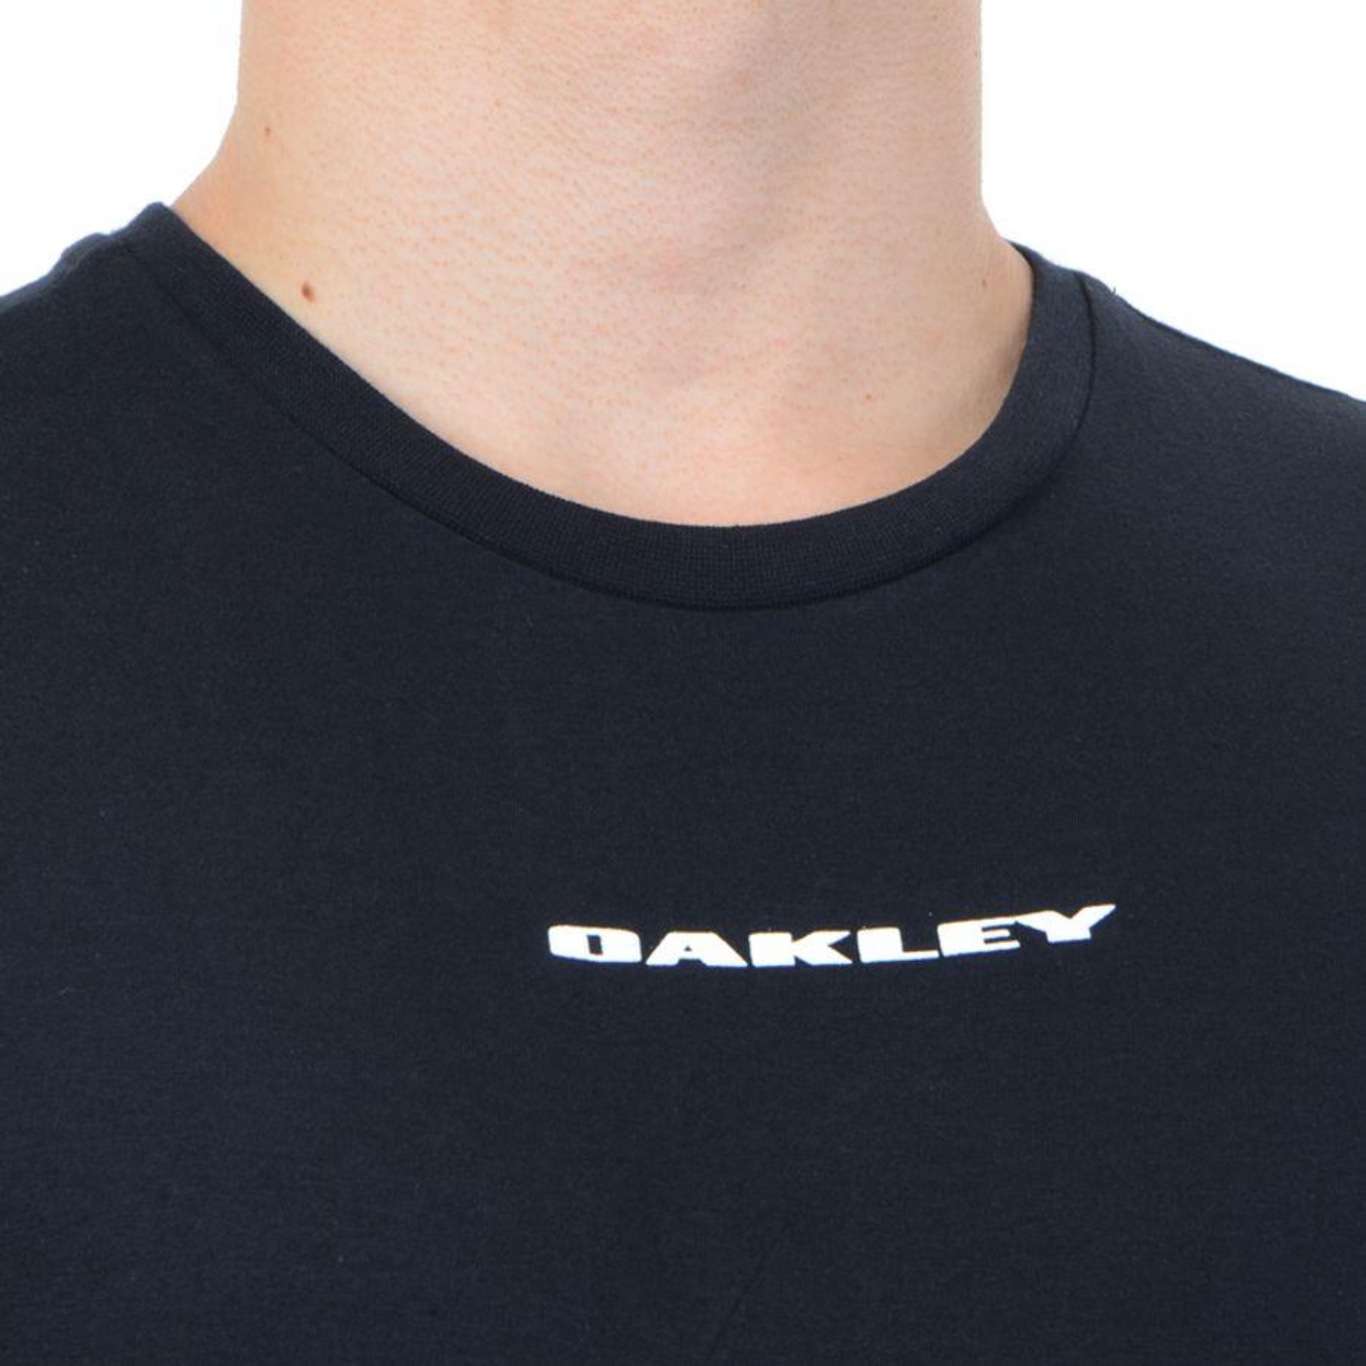 Camiseta Oakley Skull Heritage Preto - Preto